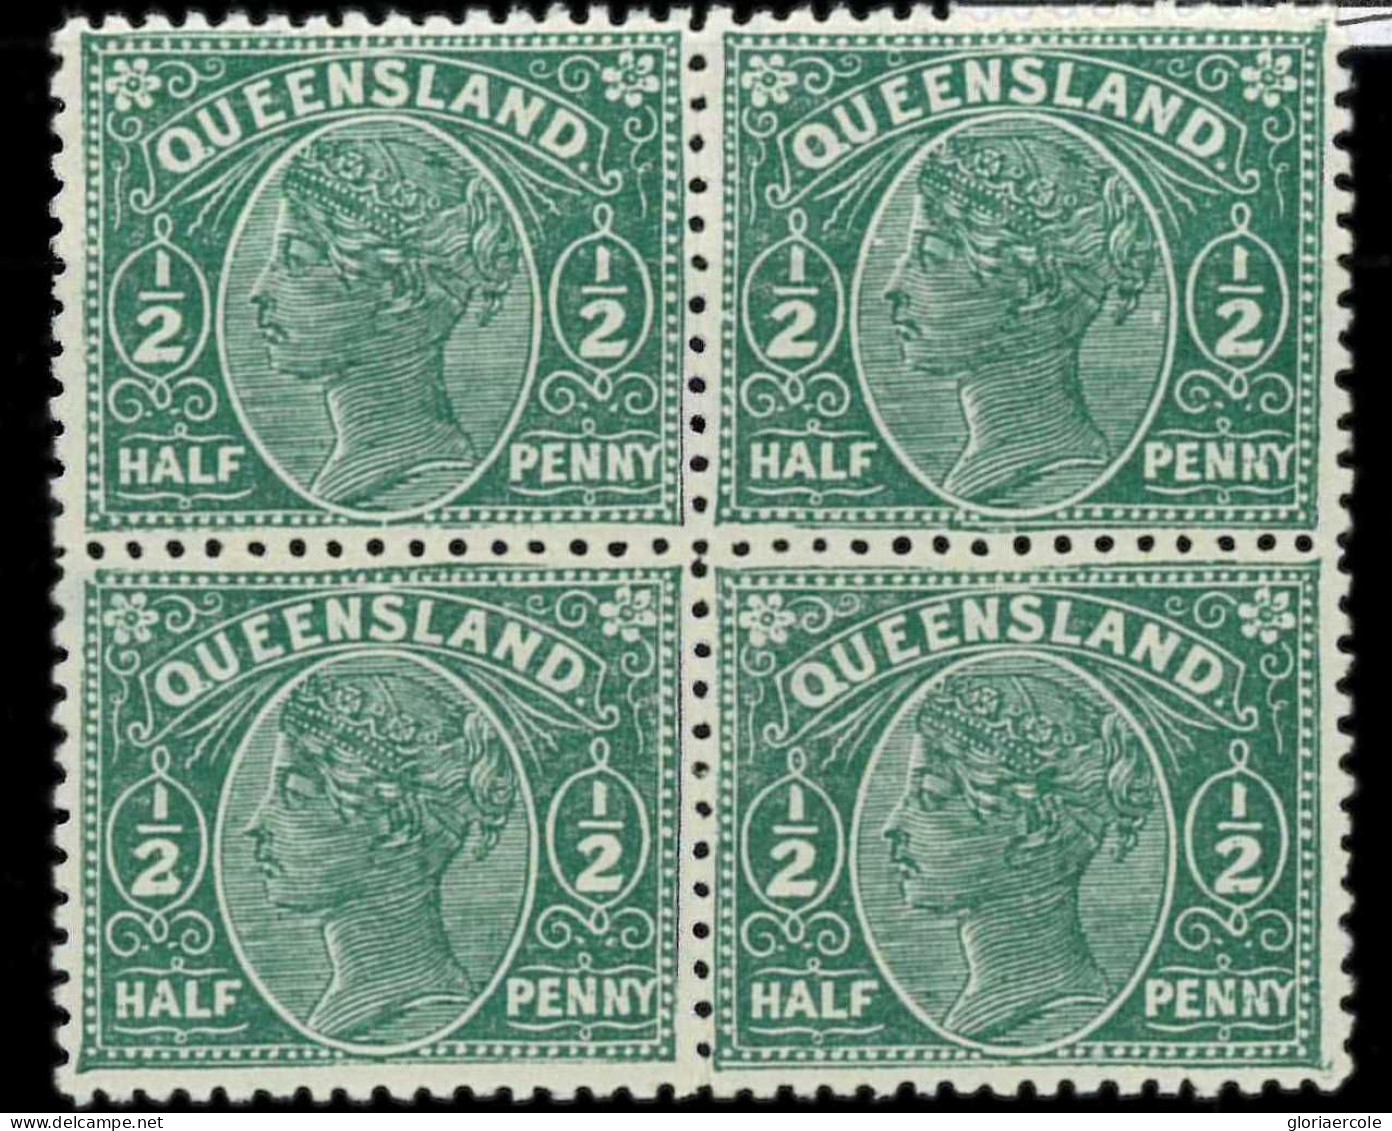 Aa5622h - Australia QUEENSLAND - STAMP - SG # 186 Block 4  - Mint MNH + MLH - Mint Stamps